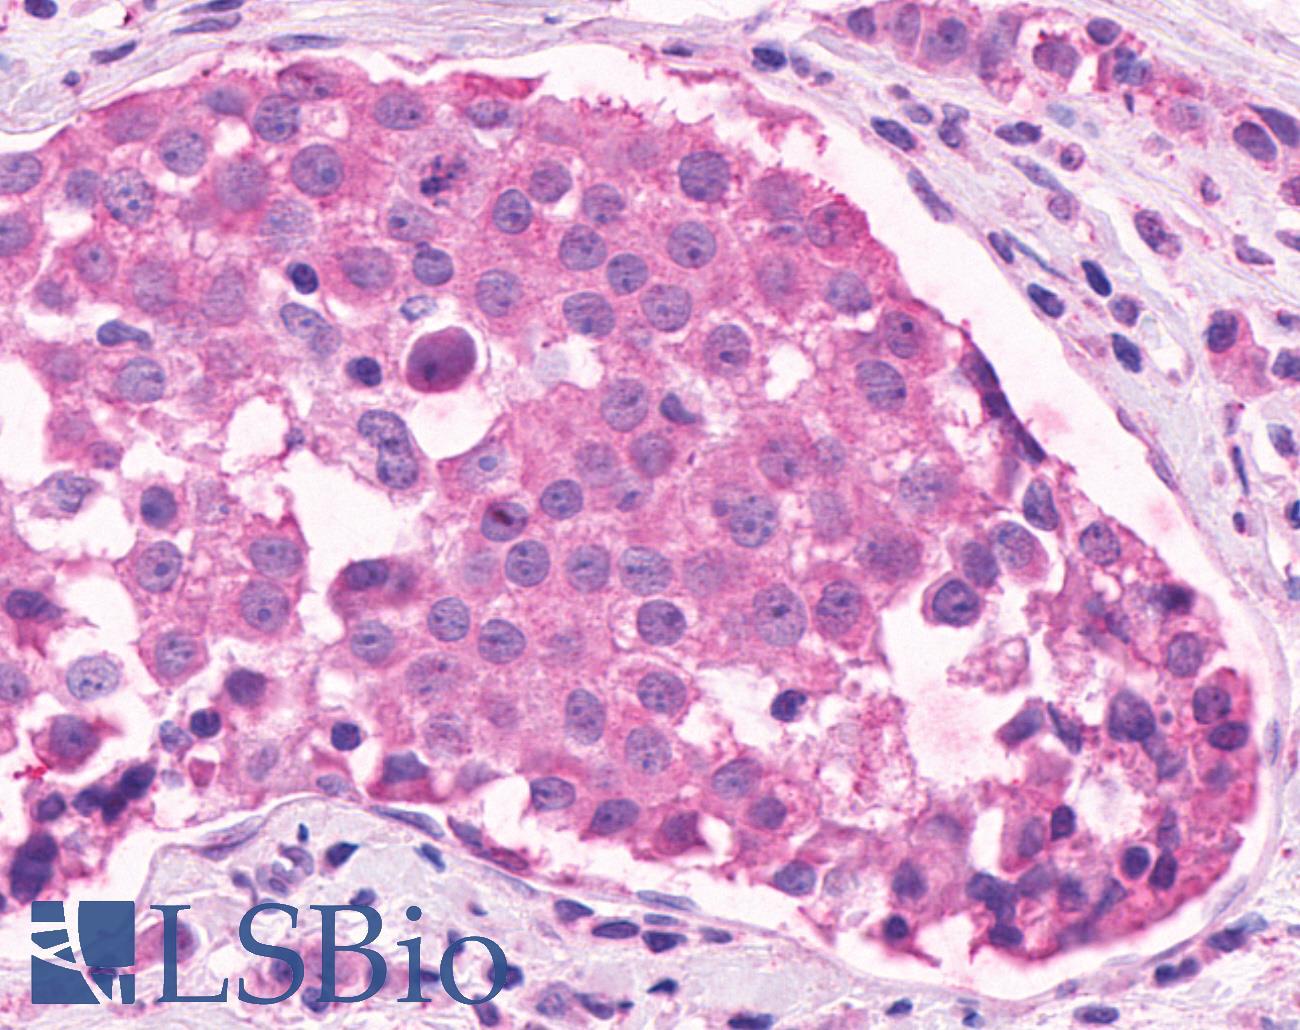 OR2A4 Antibody - Breast, Carcinoma